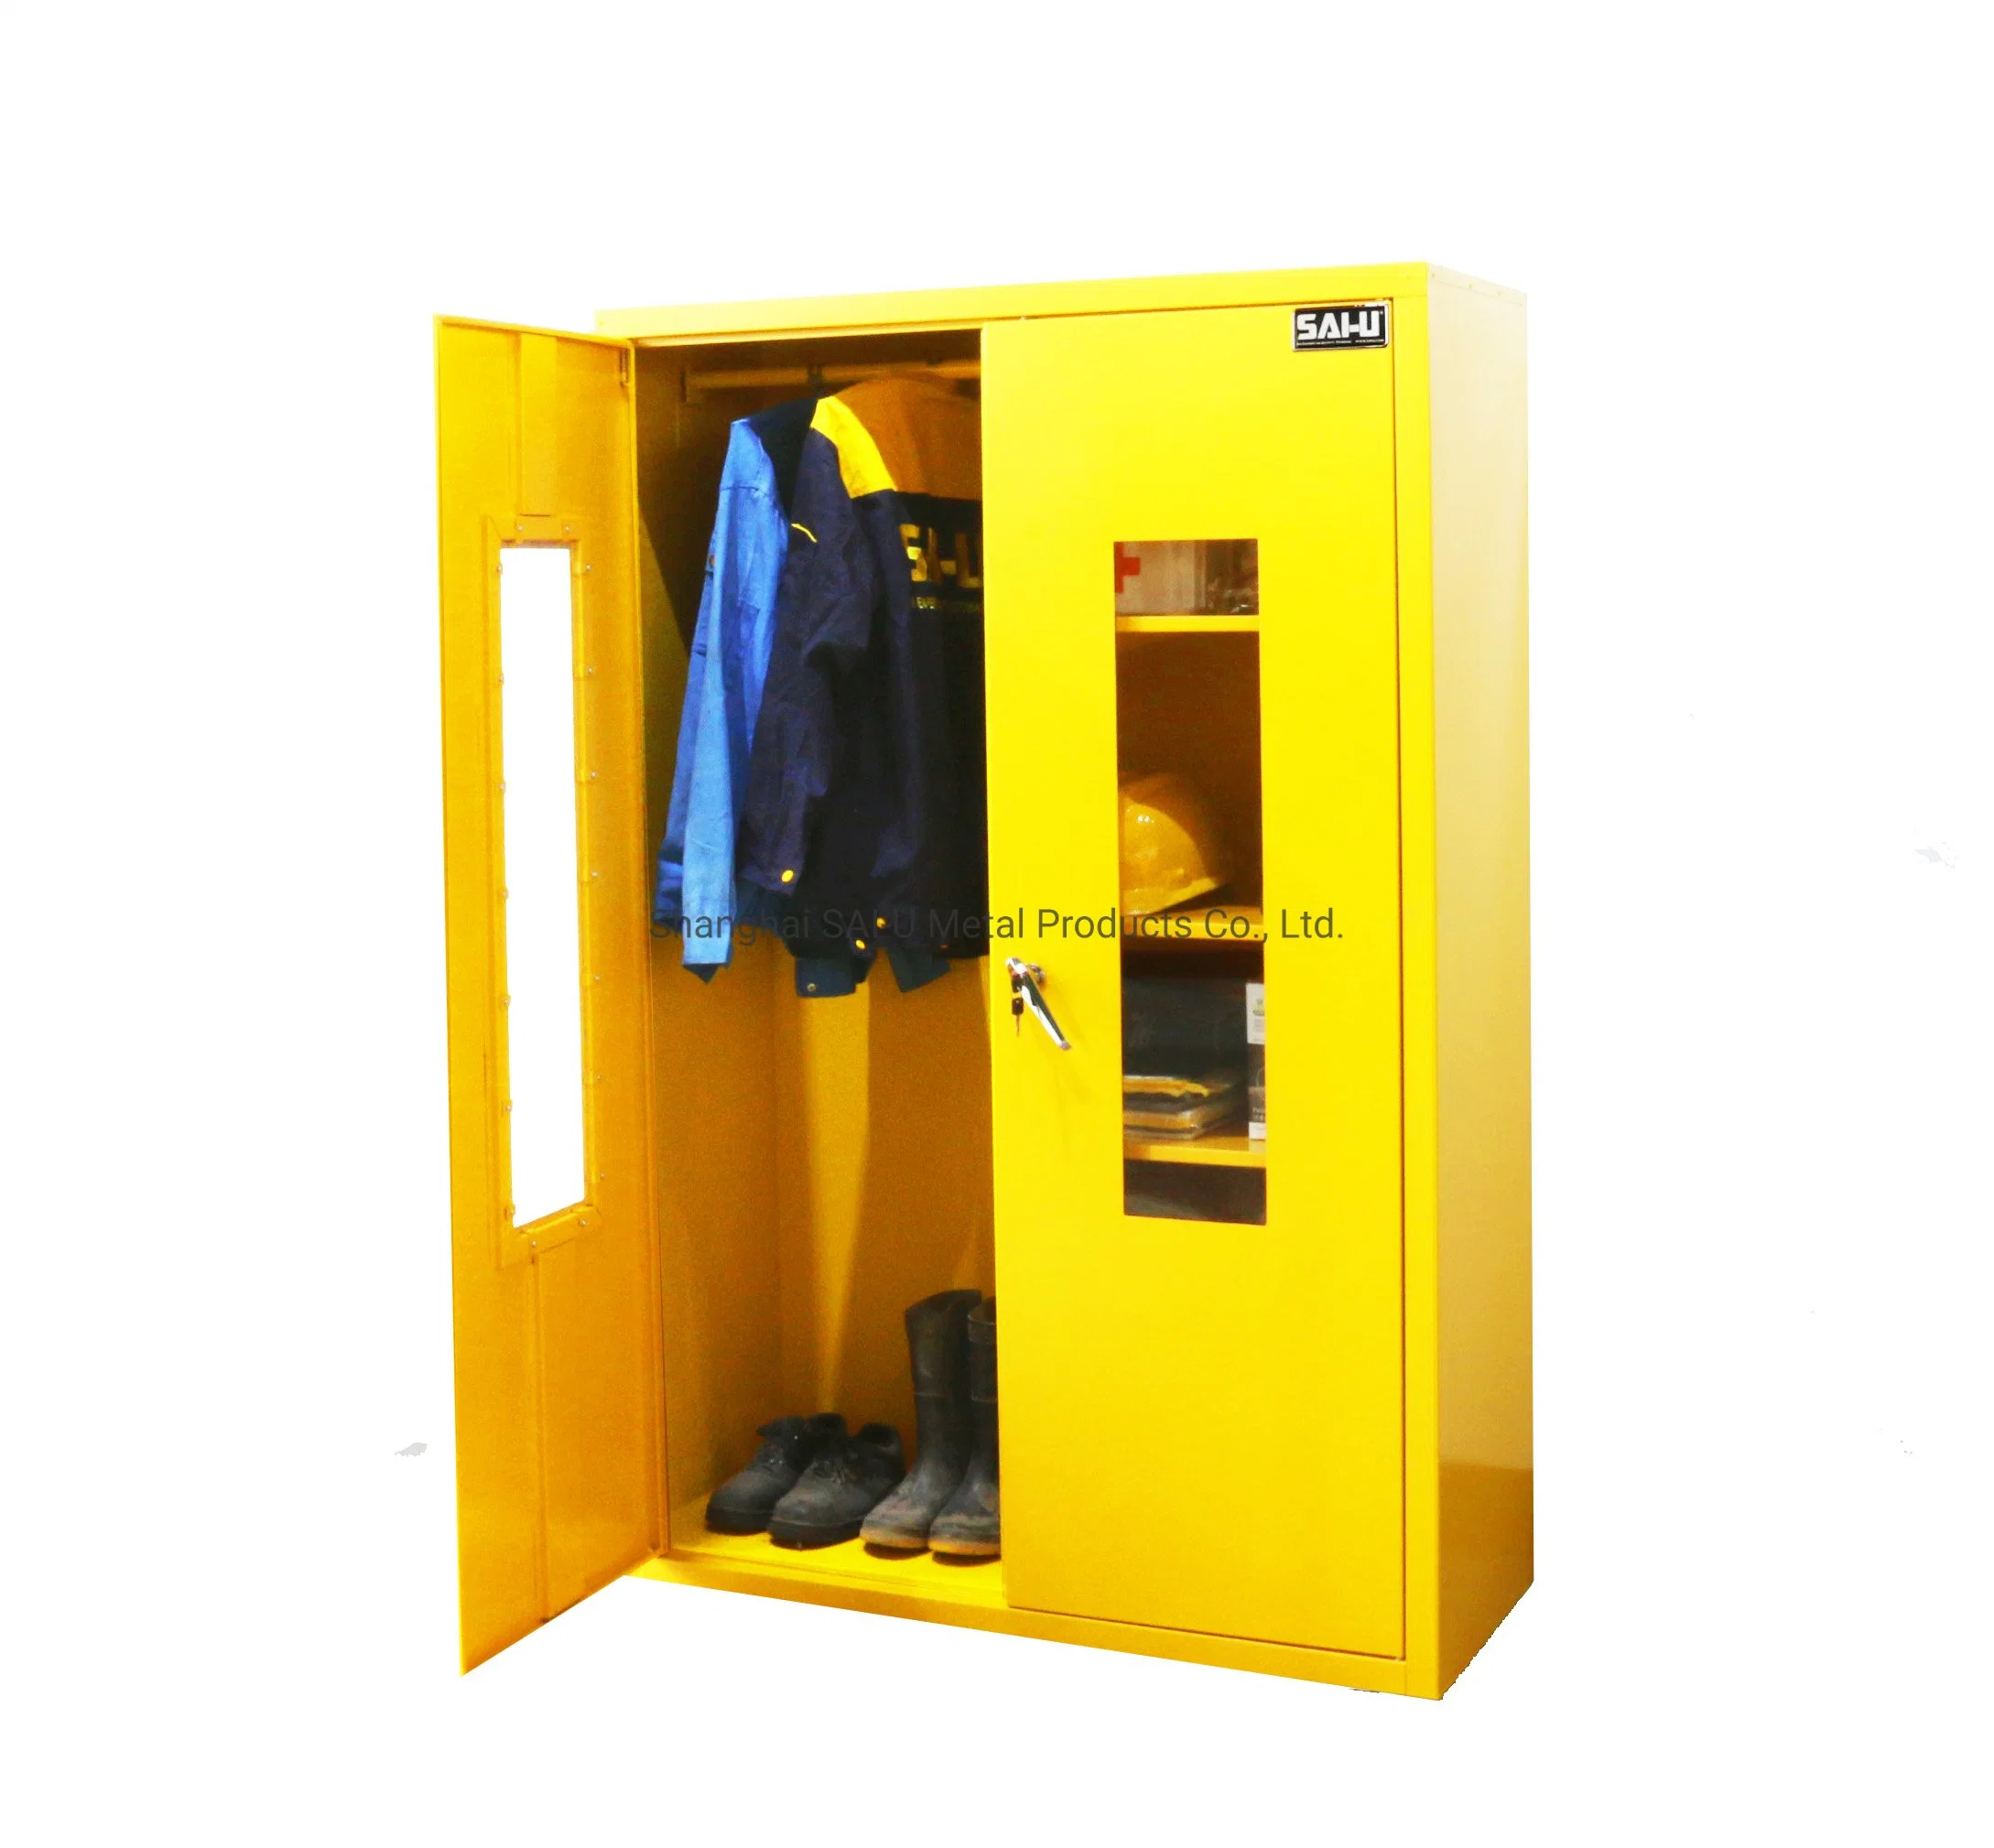 Sai-U High Quality PPE Laboratory Emergency Equipment Safety Storage Cabinet